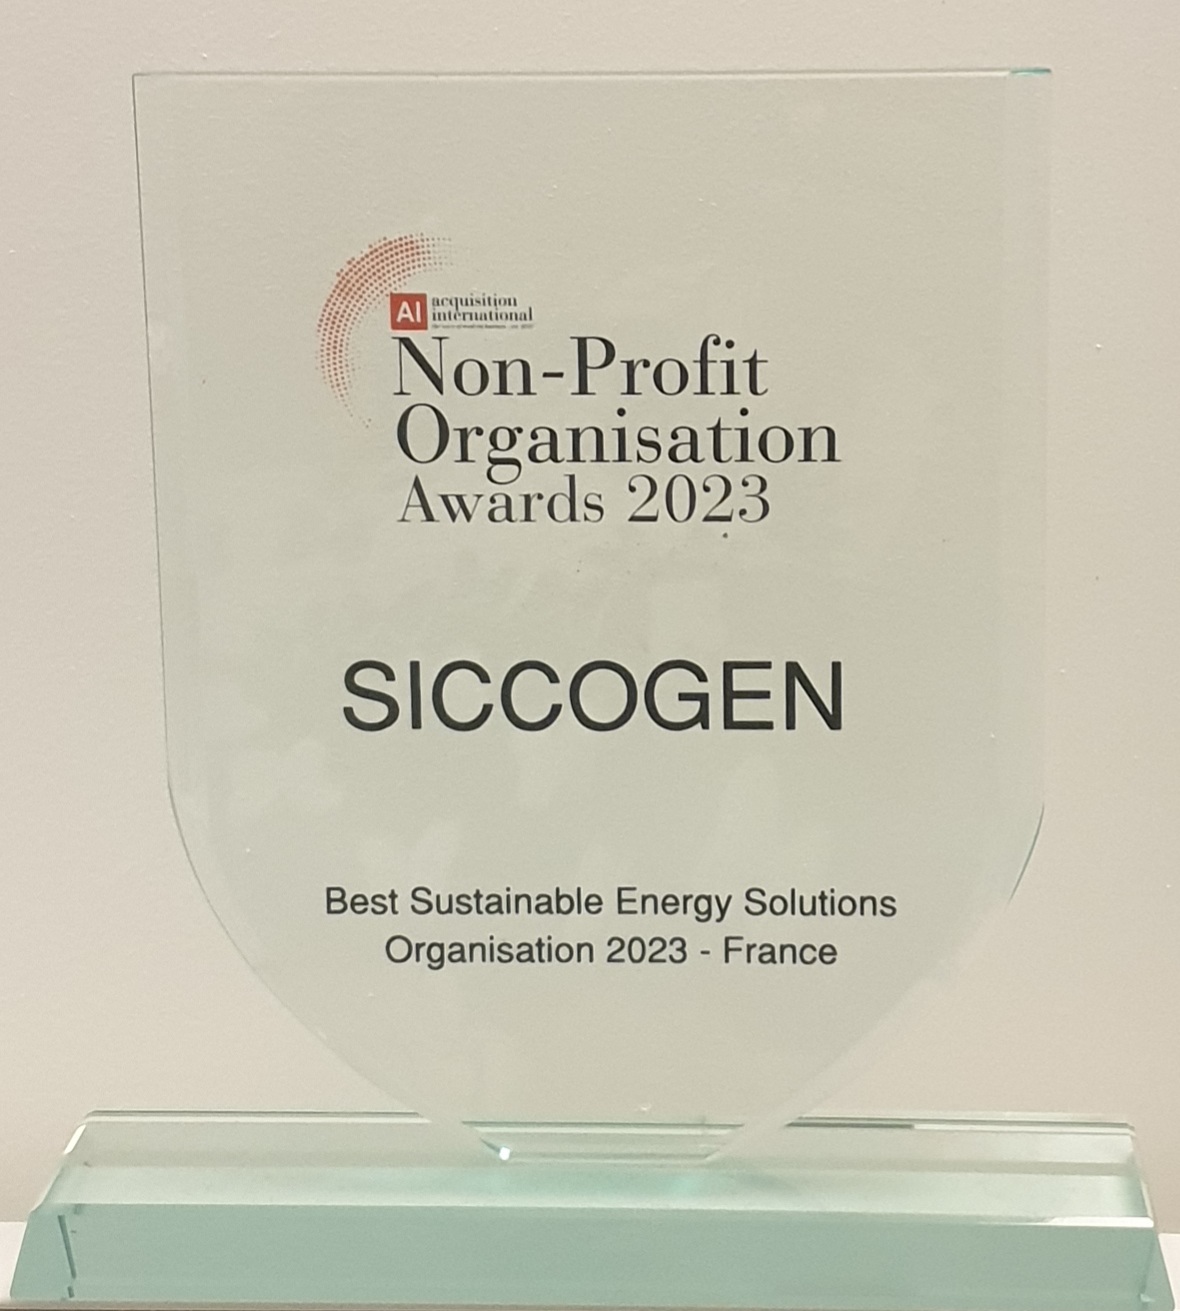 Siccogen Best Sustainable Energy Solutions Organisation 2023 – France -Acquisition International 